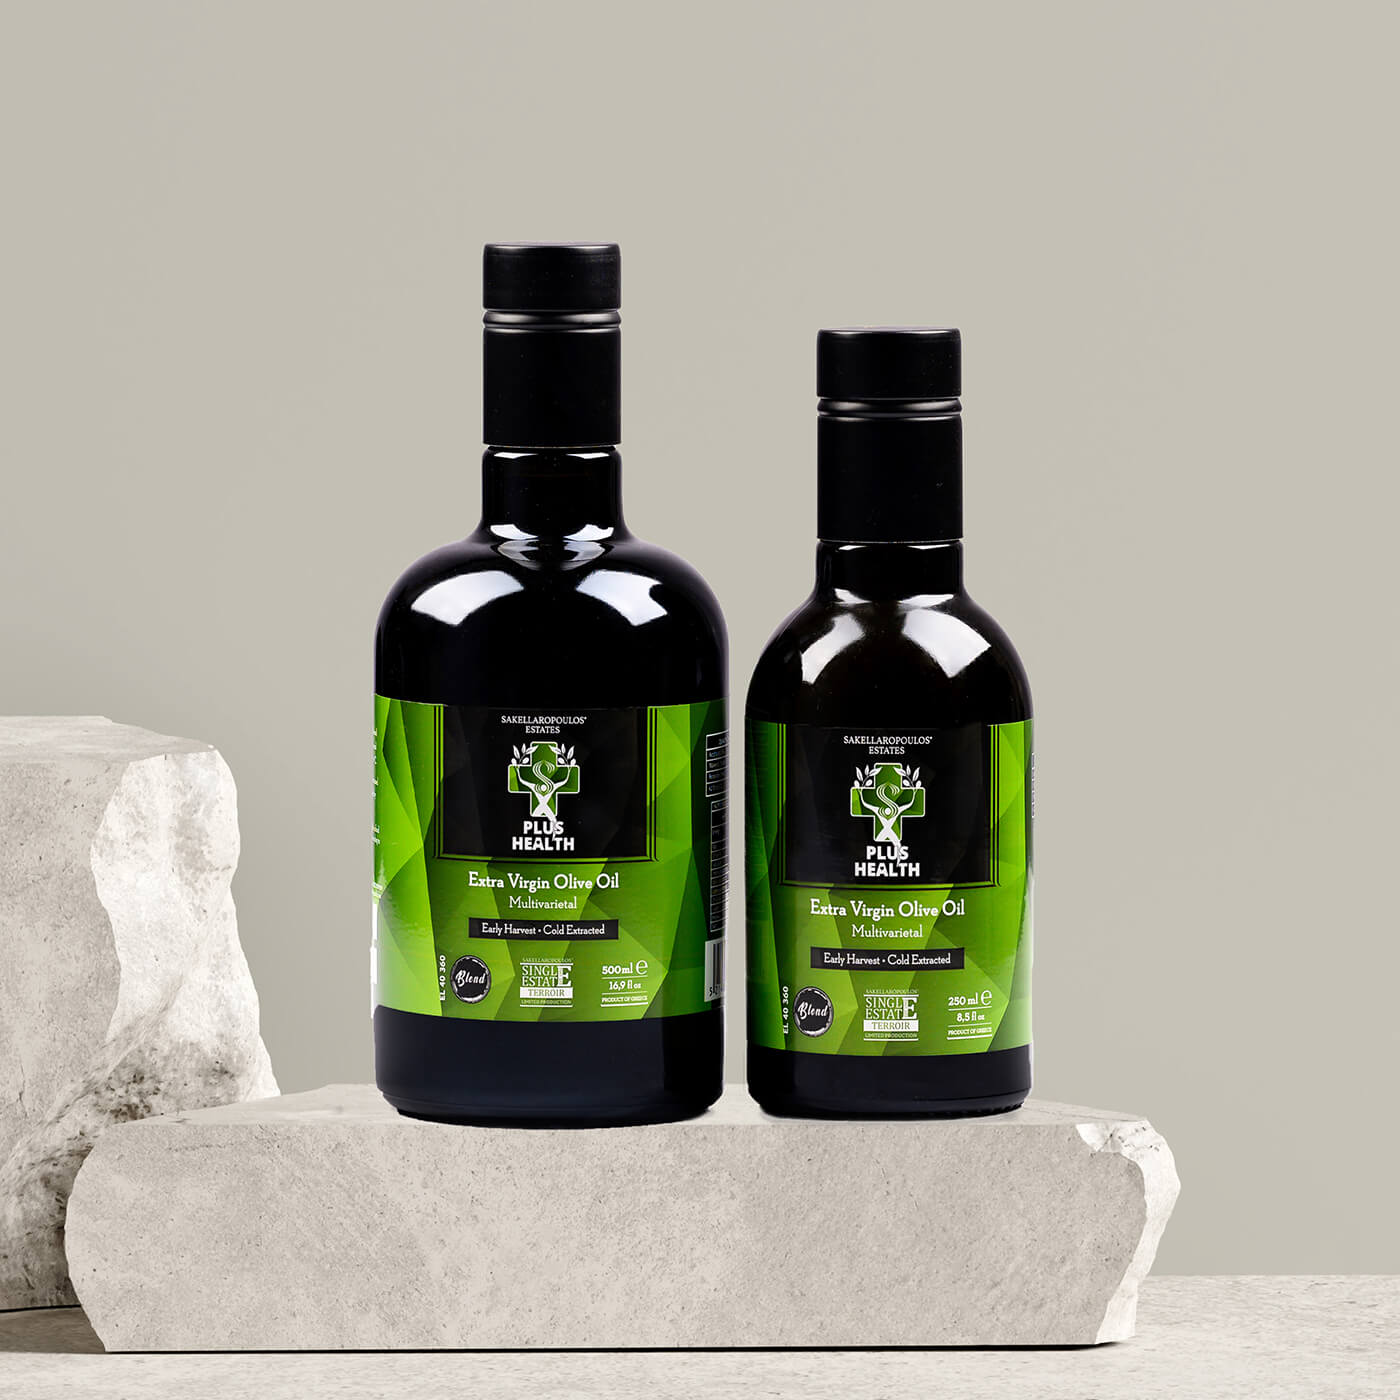 Plus Health Multivarietal Green extra virgin olive oil polyphenols oleocanthal Greek